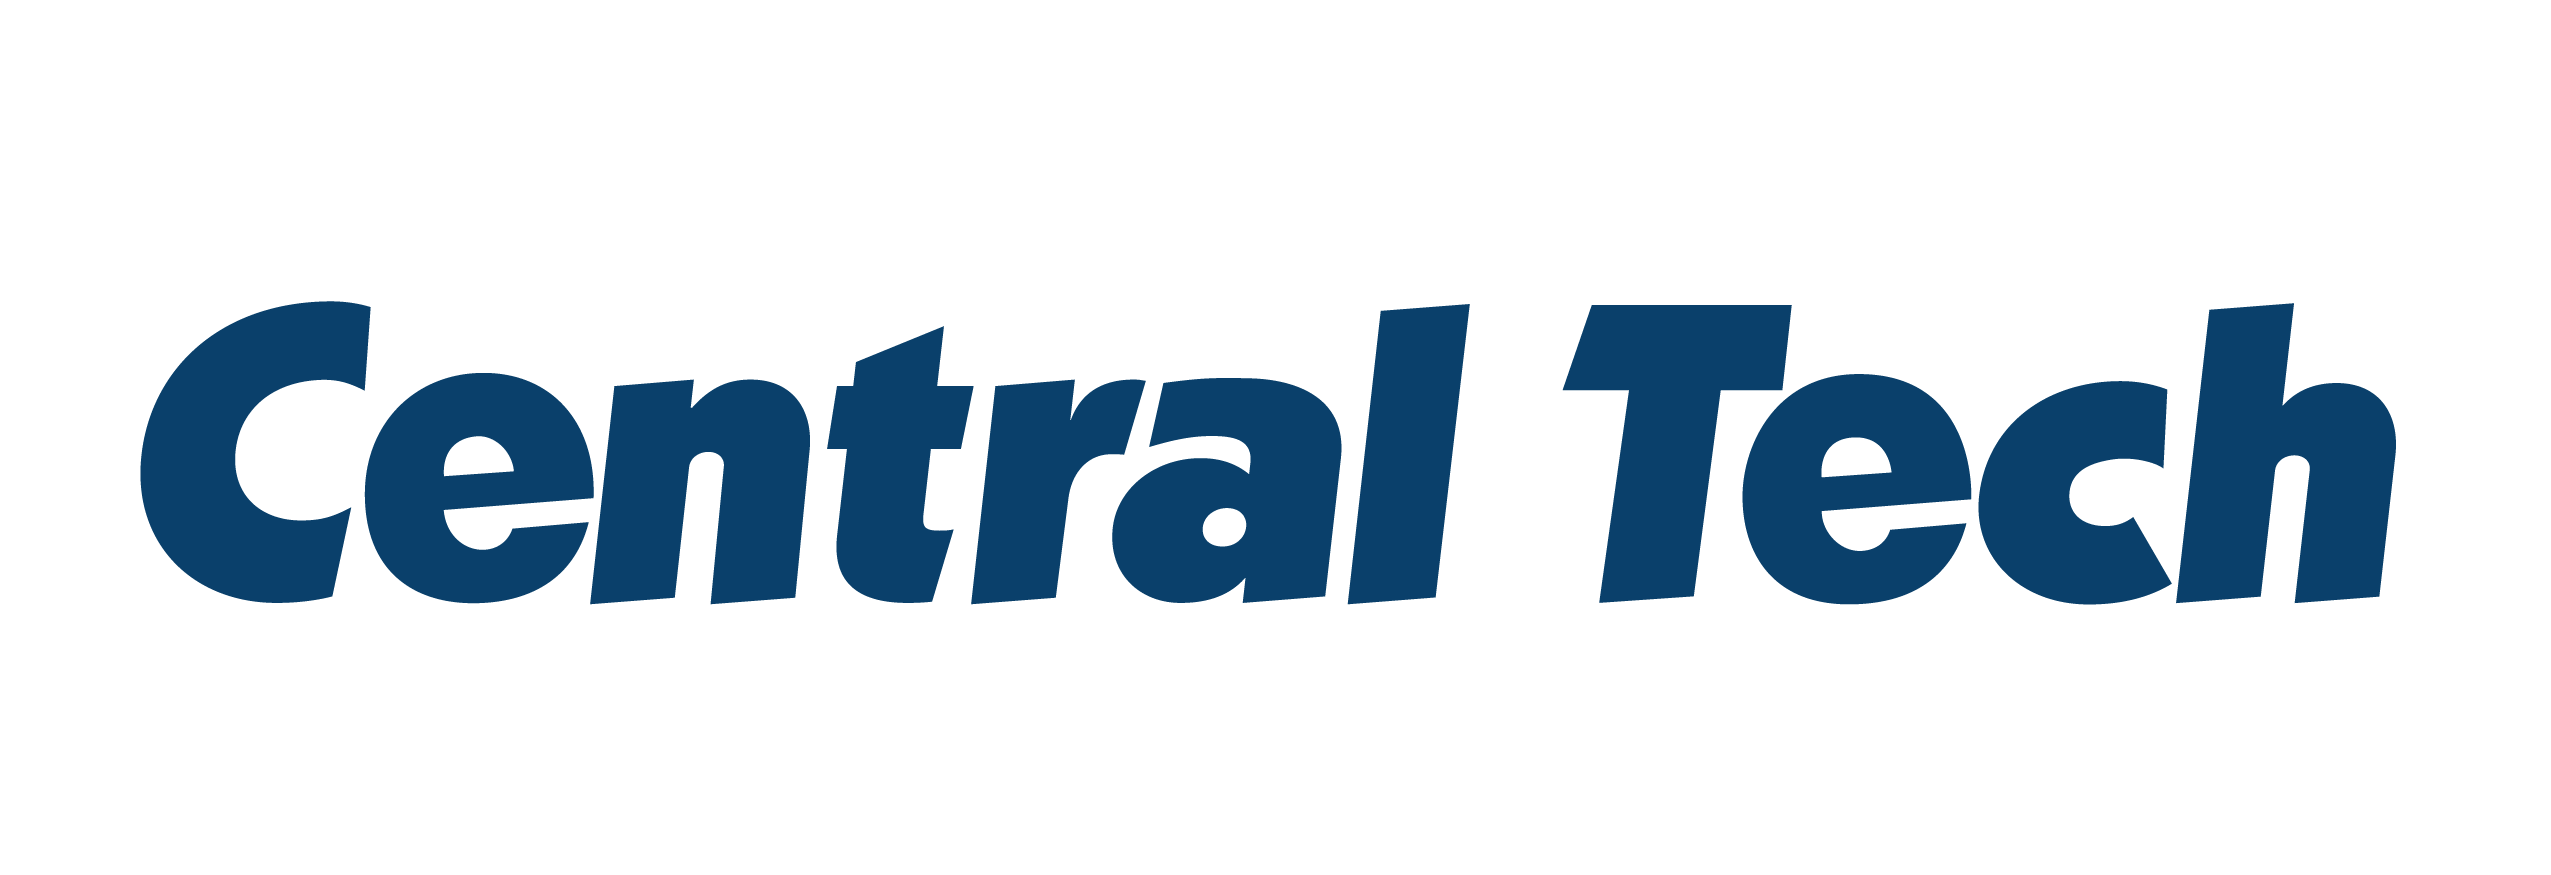 Central Technology Center Company Logo